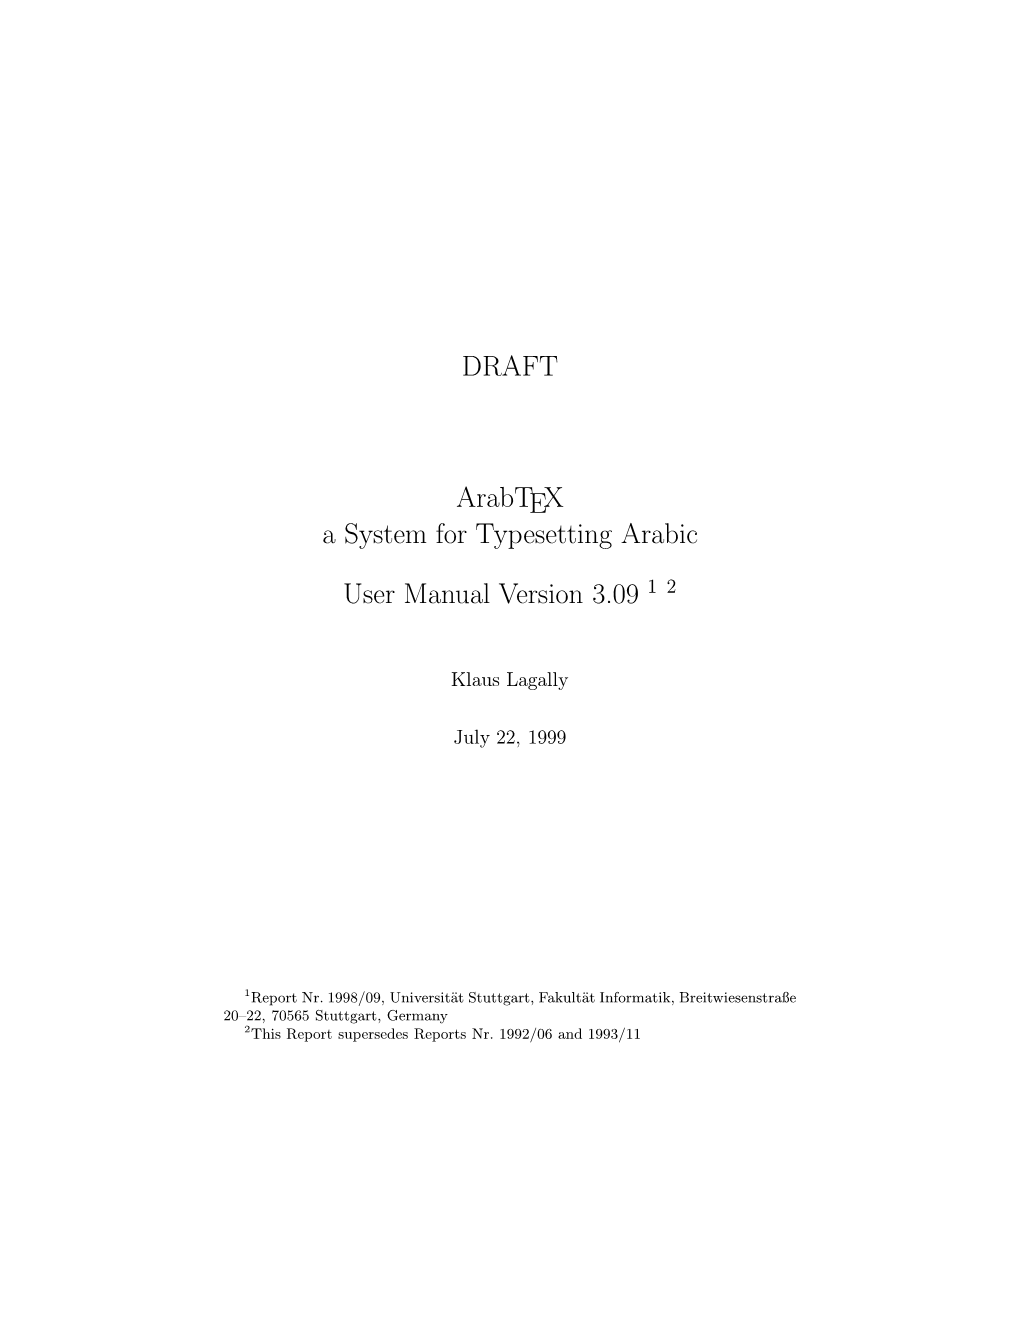 DRAFT Arabtex a System for Typesetting Arabic User Manual